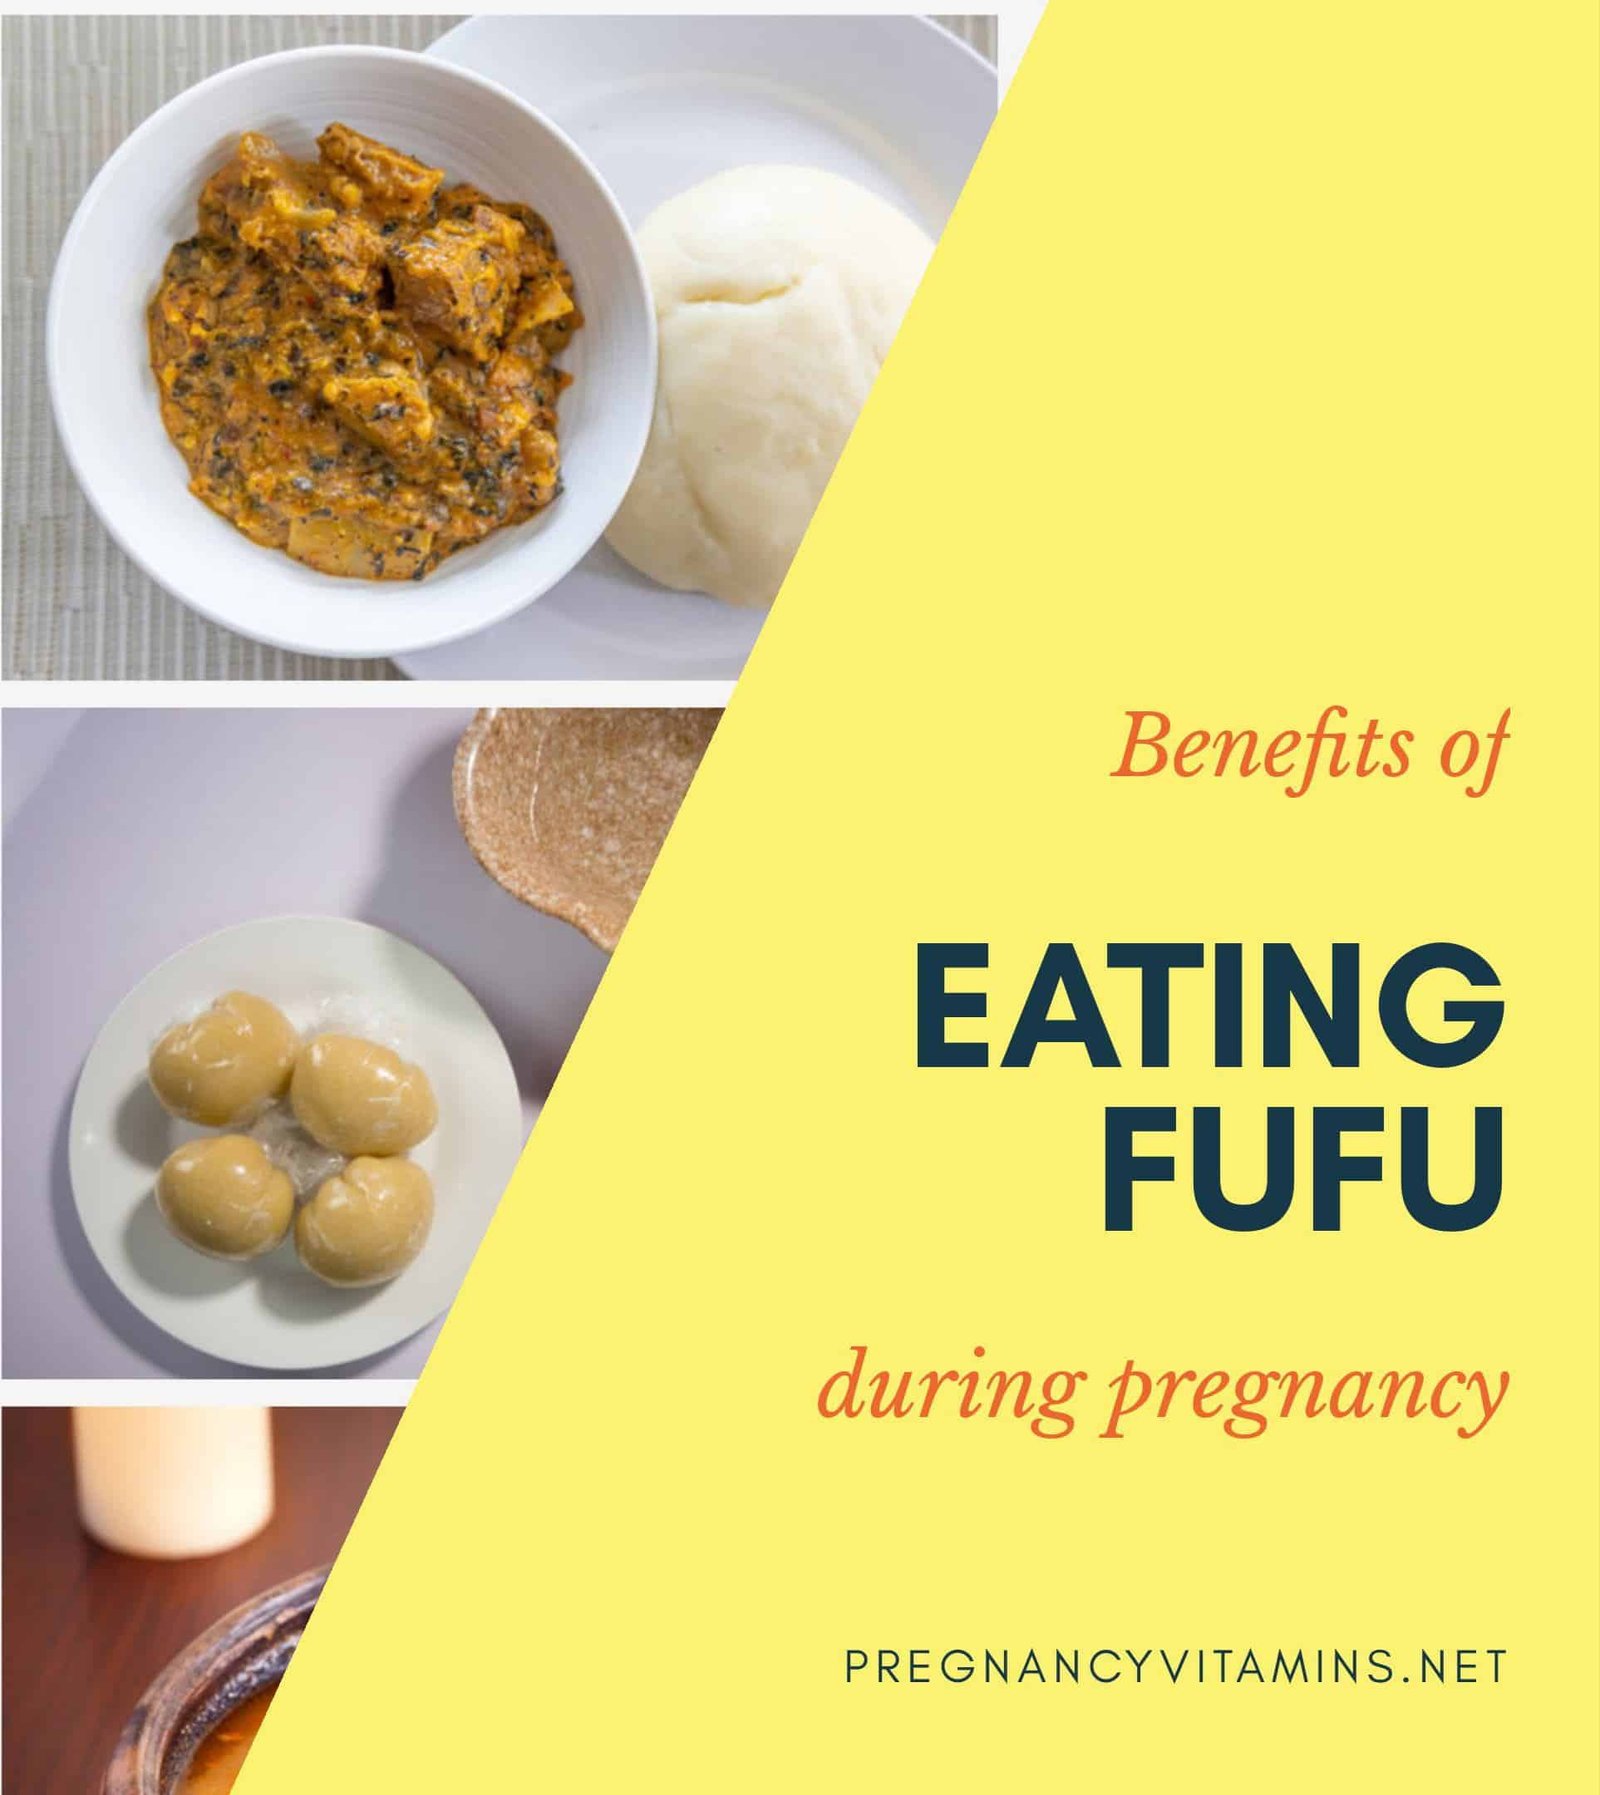 Eating fufu during pregnancy